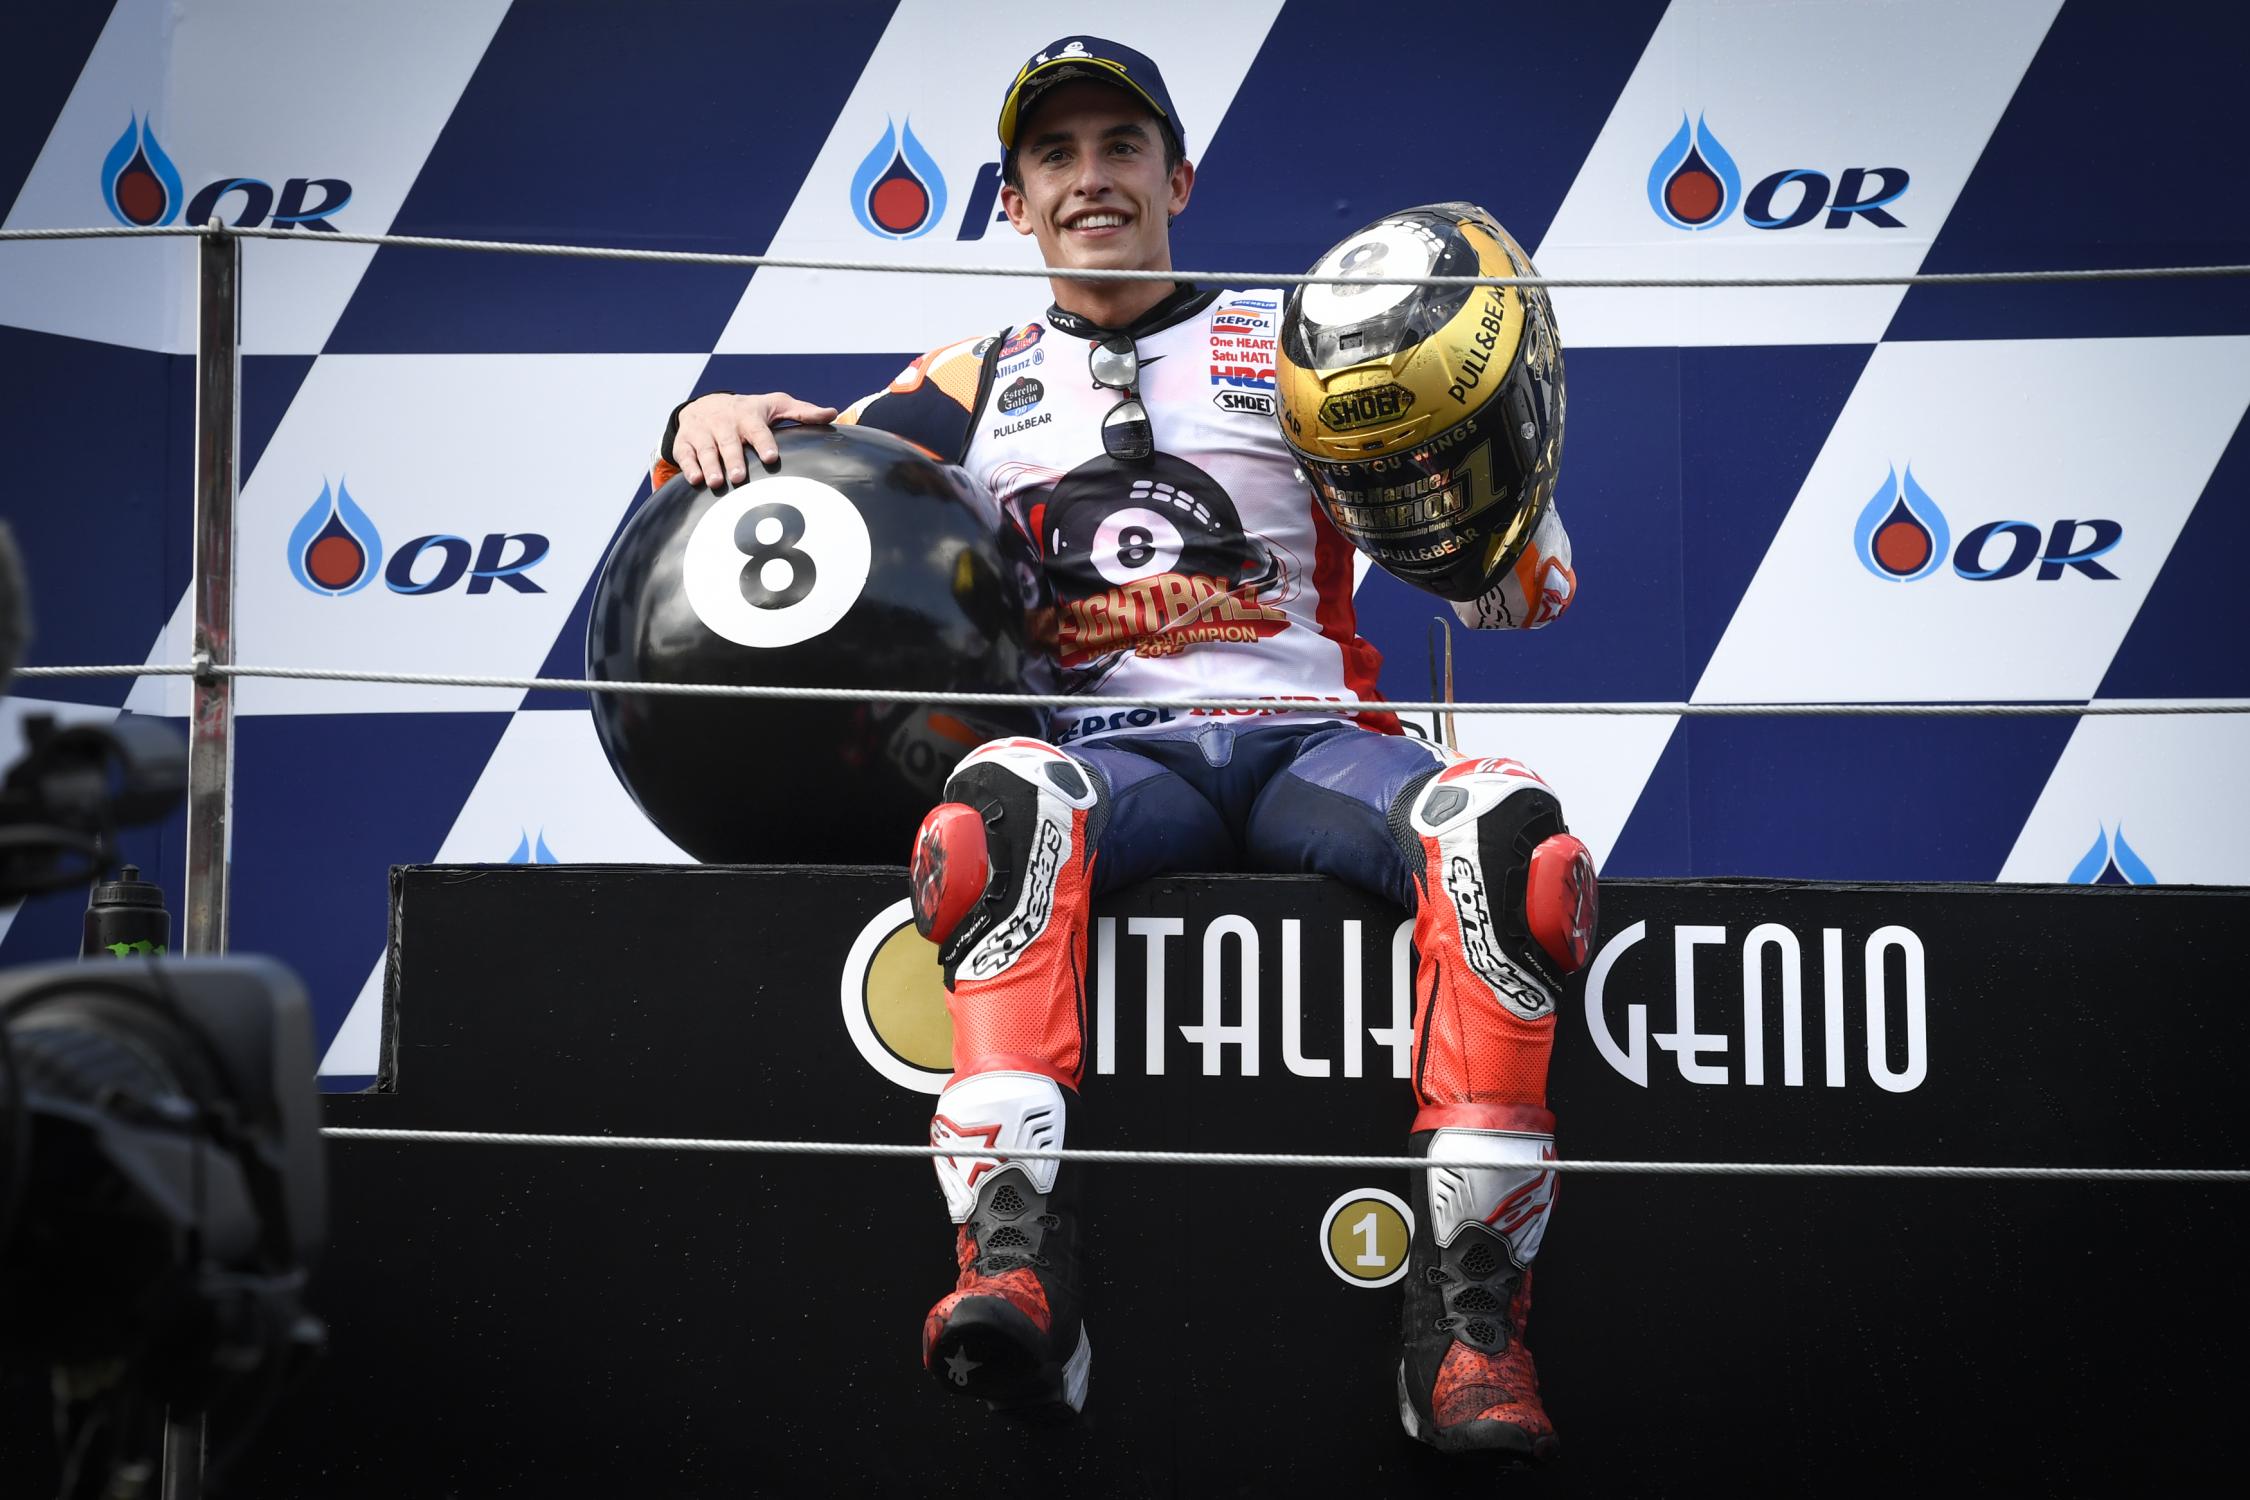 De forma magistral, Marquez supera Quartararo na volta final, vence e conquista o 6ºtítulo Mundial na MotoGP